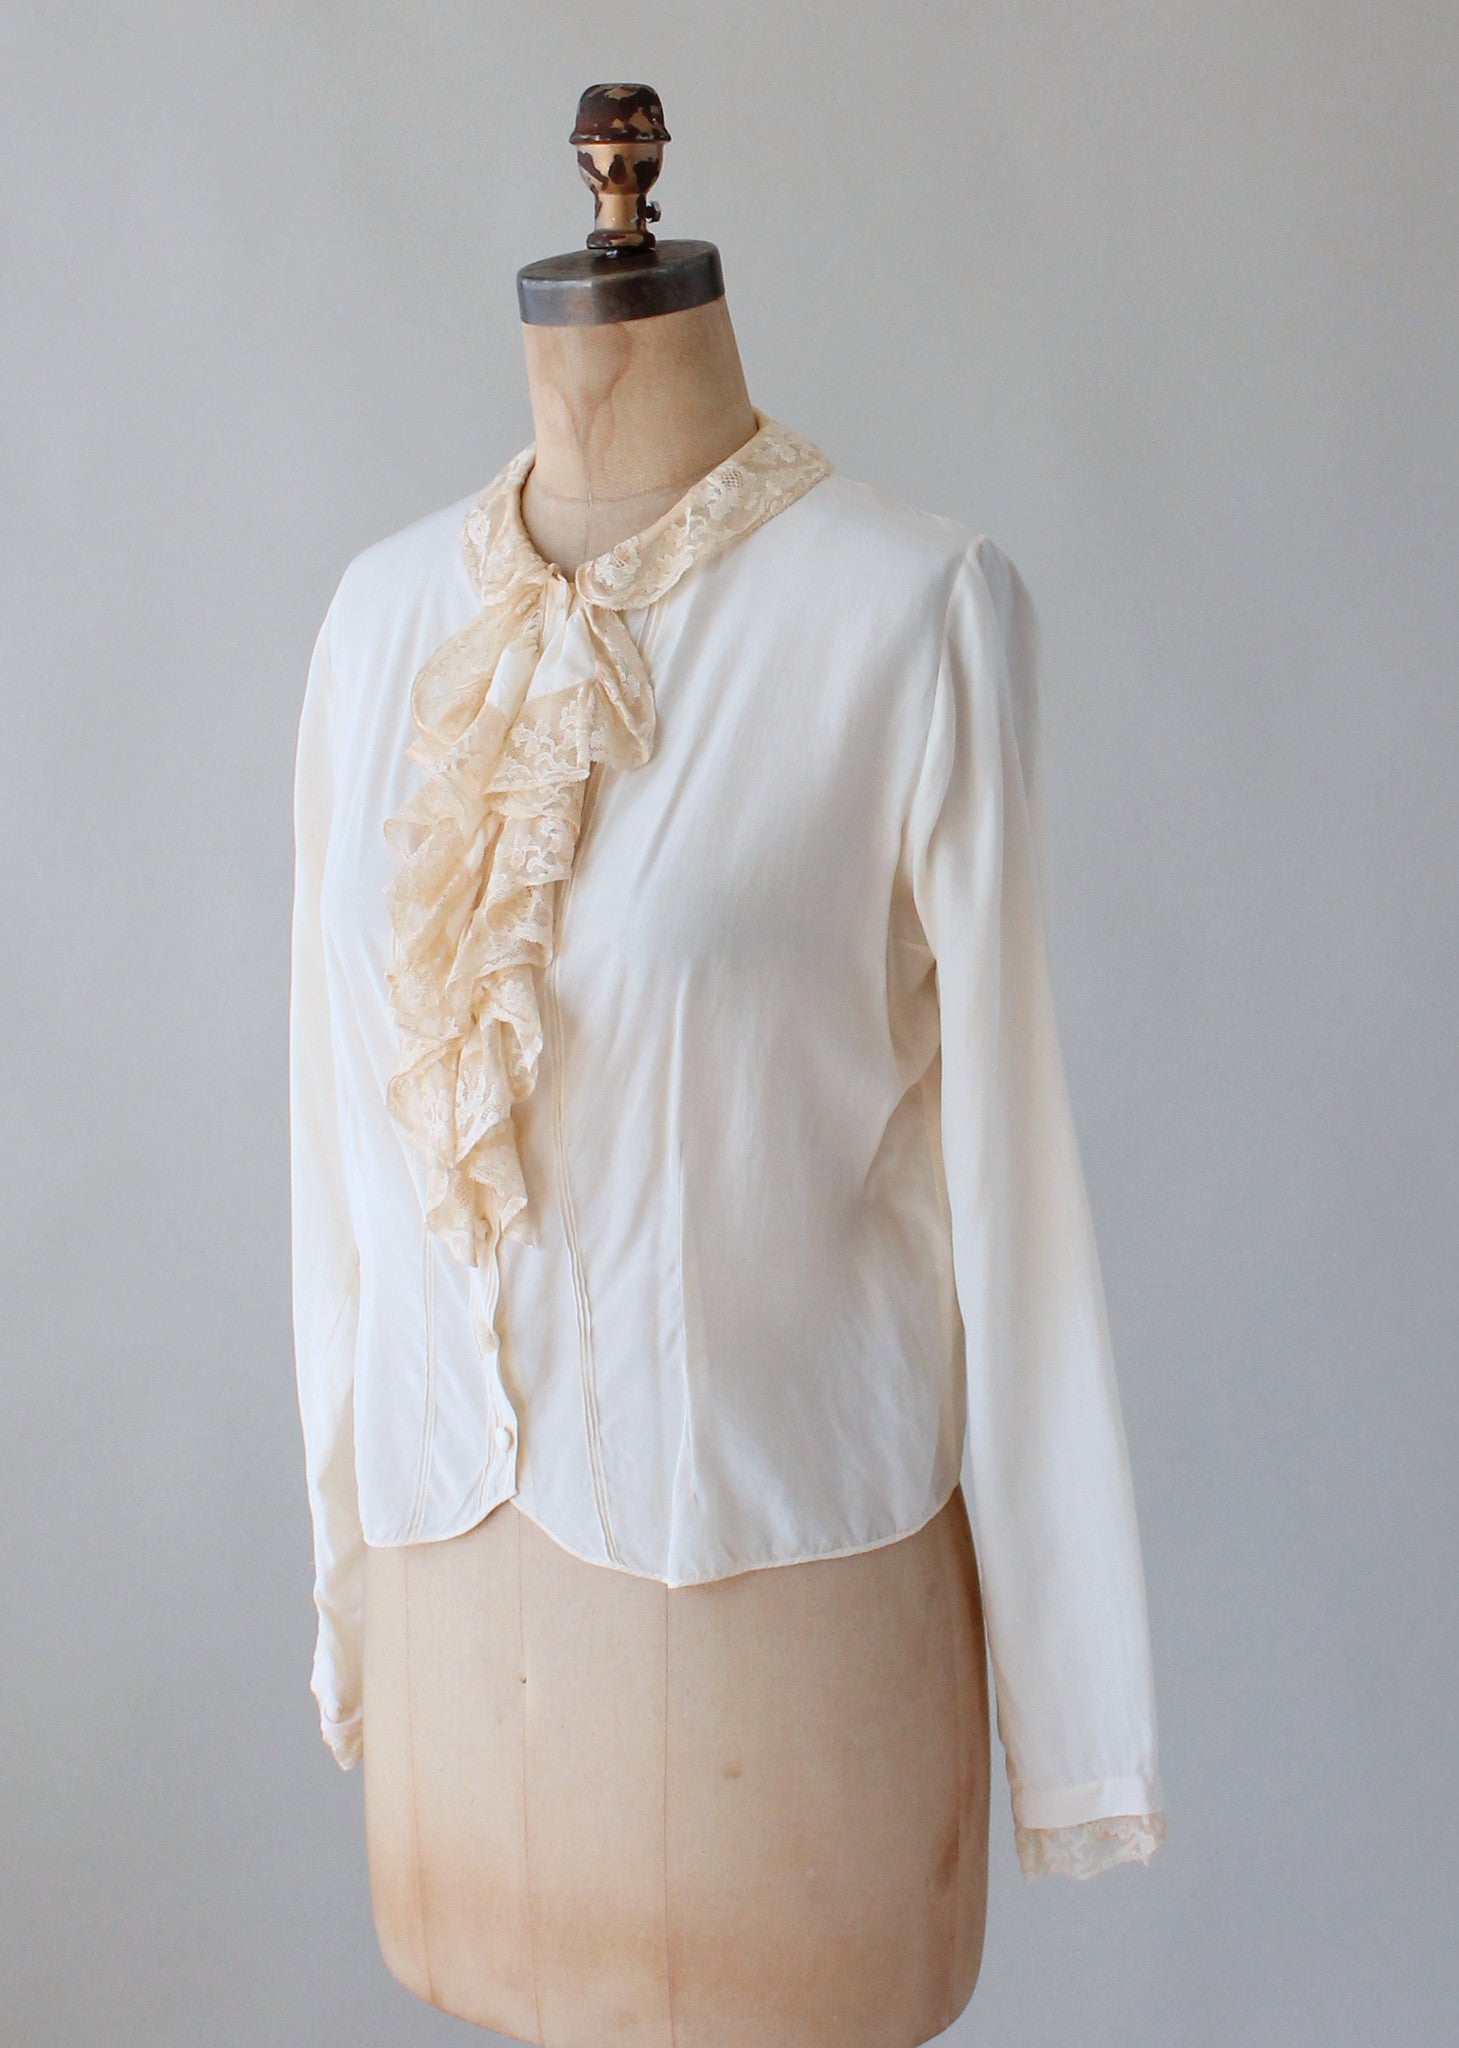 Vintage 1920s Silk and Lace Parisian Blouse - Raleigh Vintage